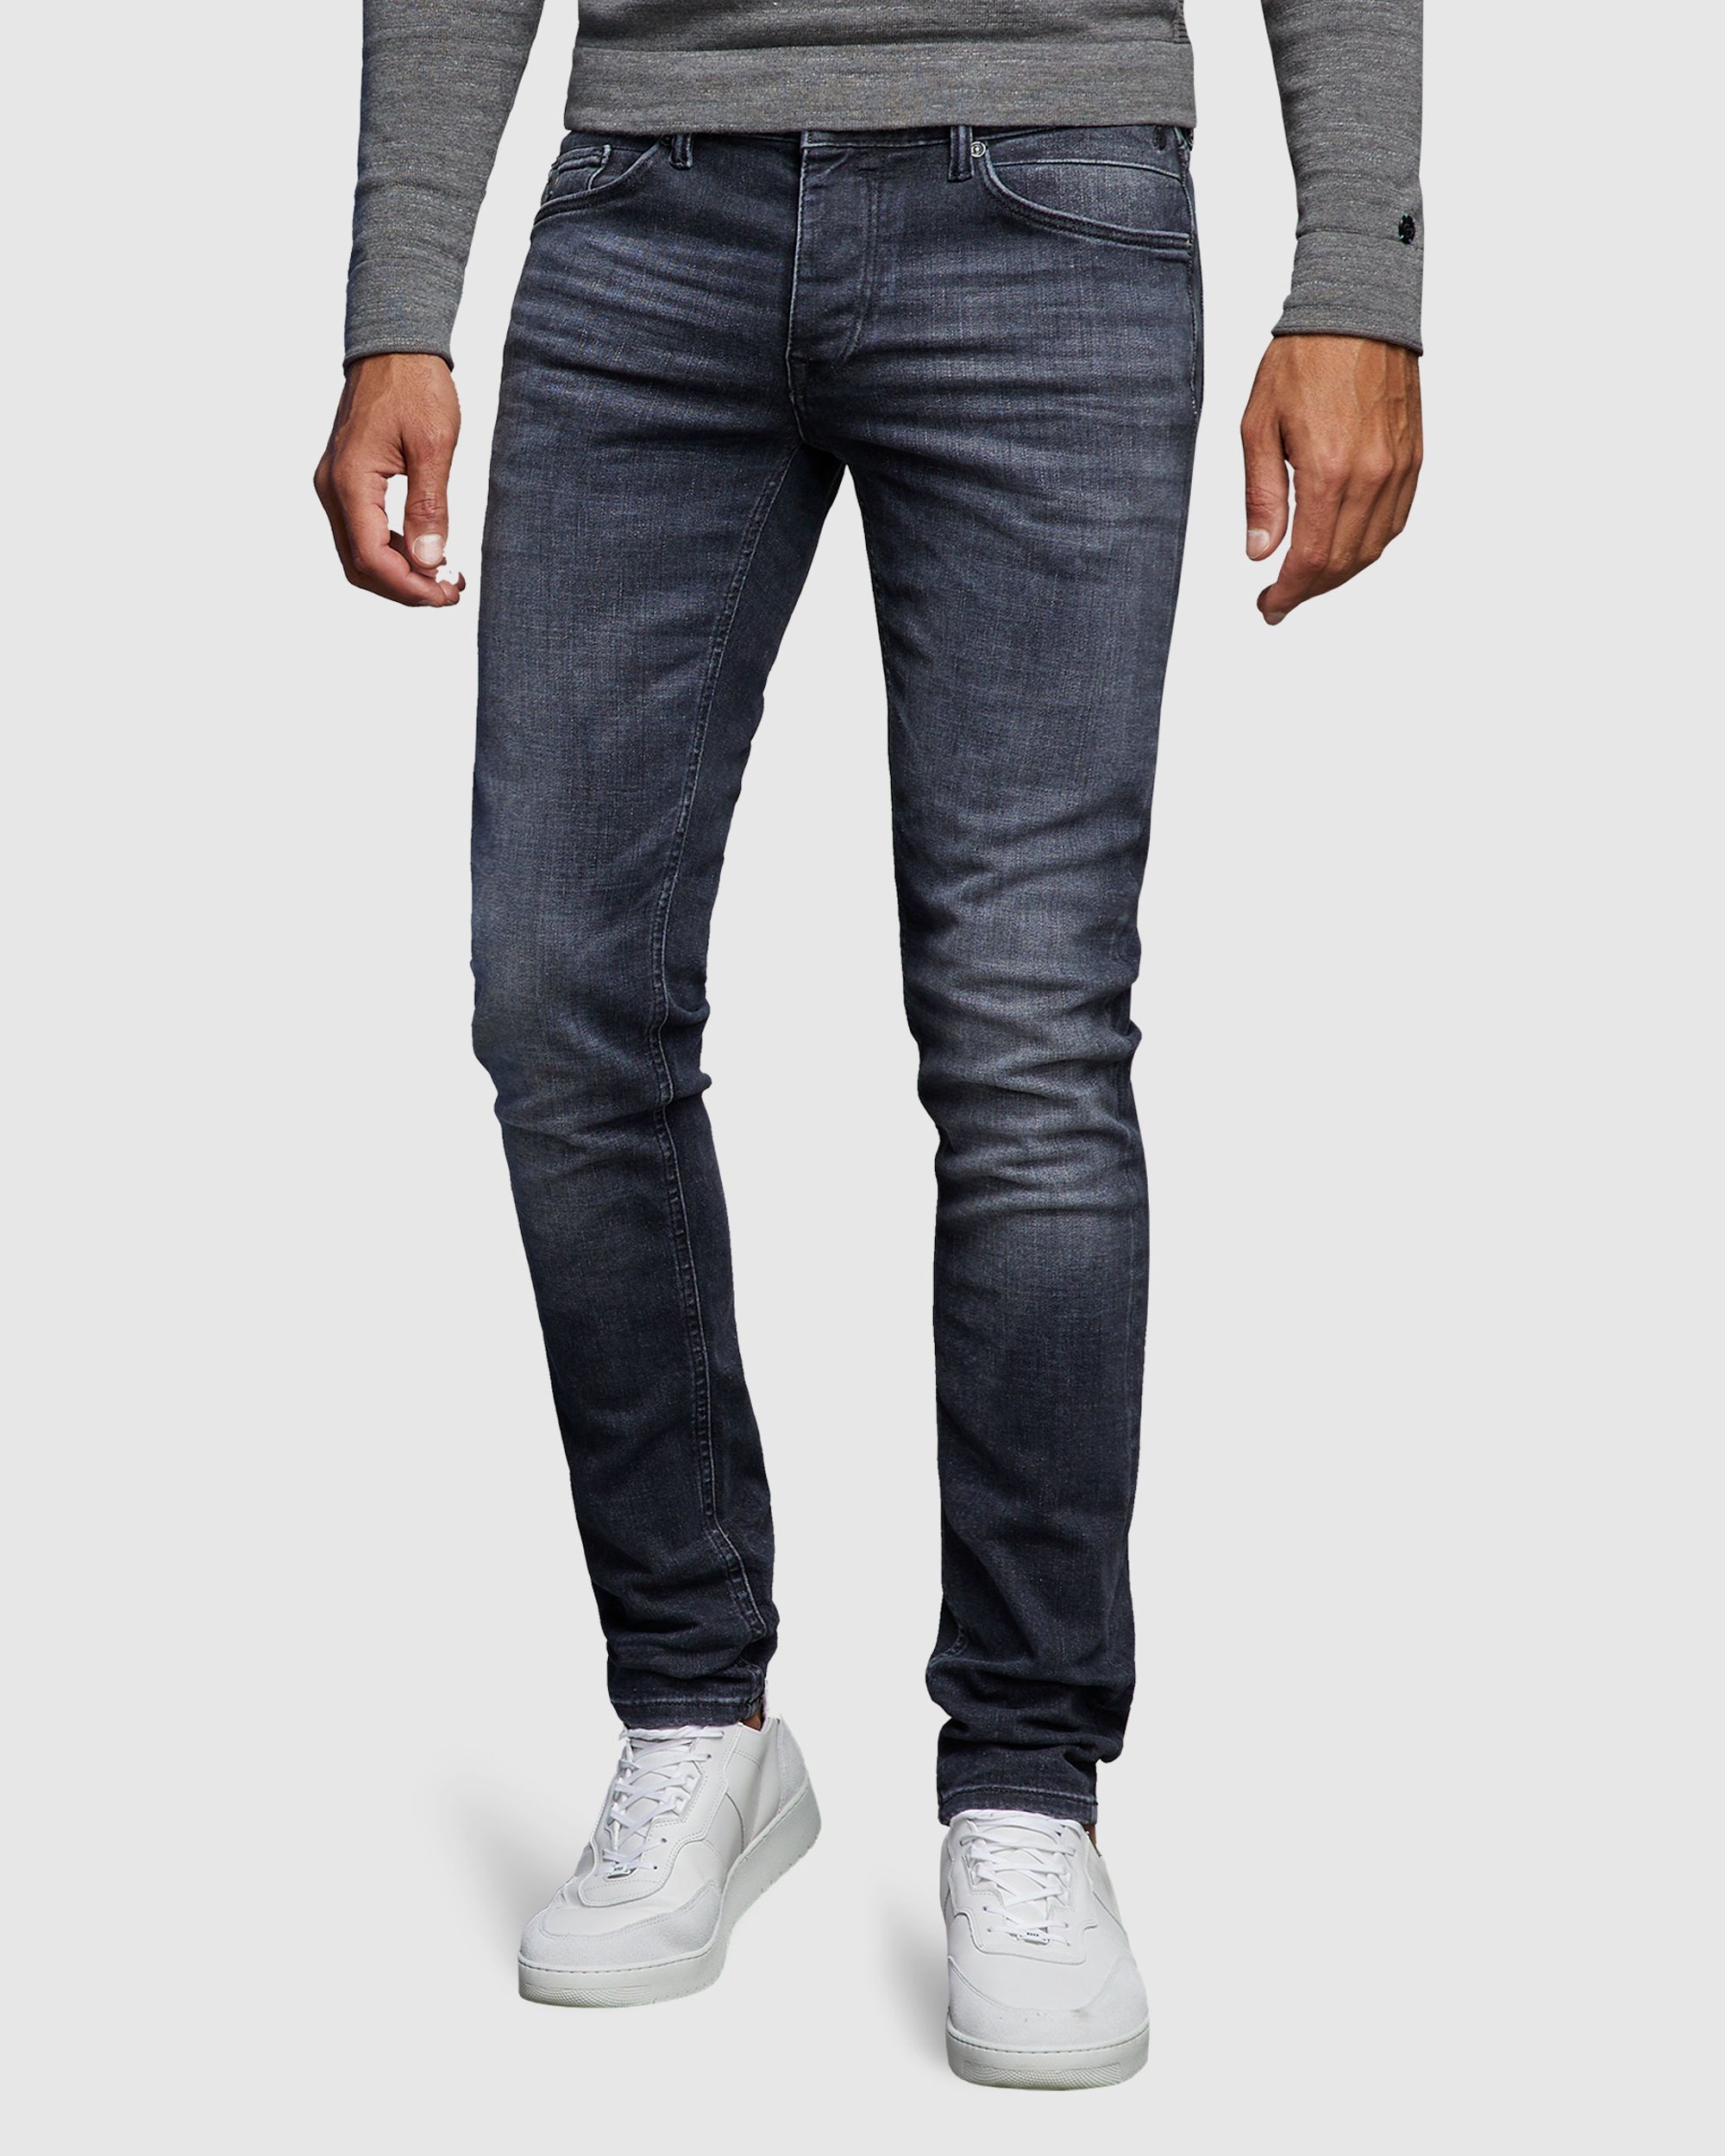 Cast Iron Riser Slim Fit Jeans Zwart 072444-001-28/32